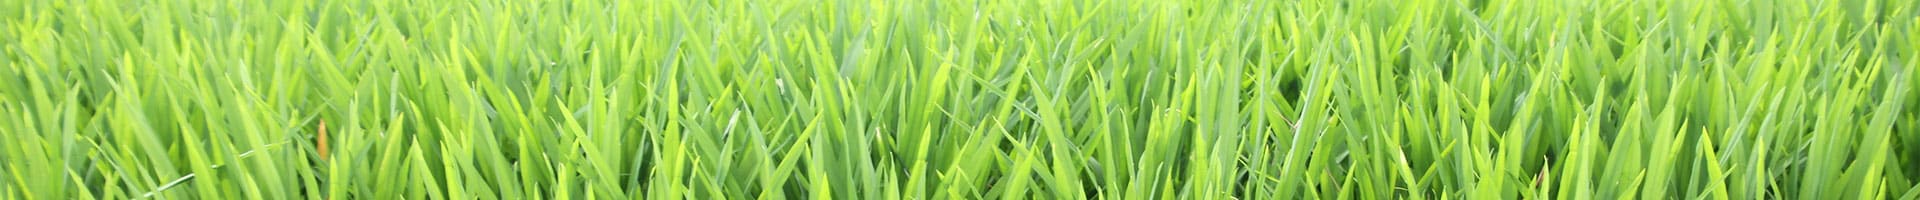 Header image rice field